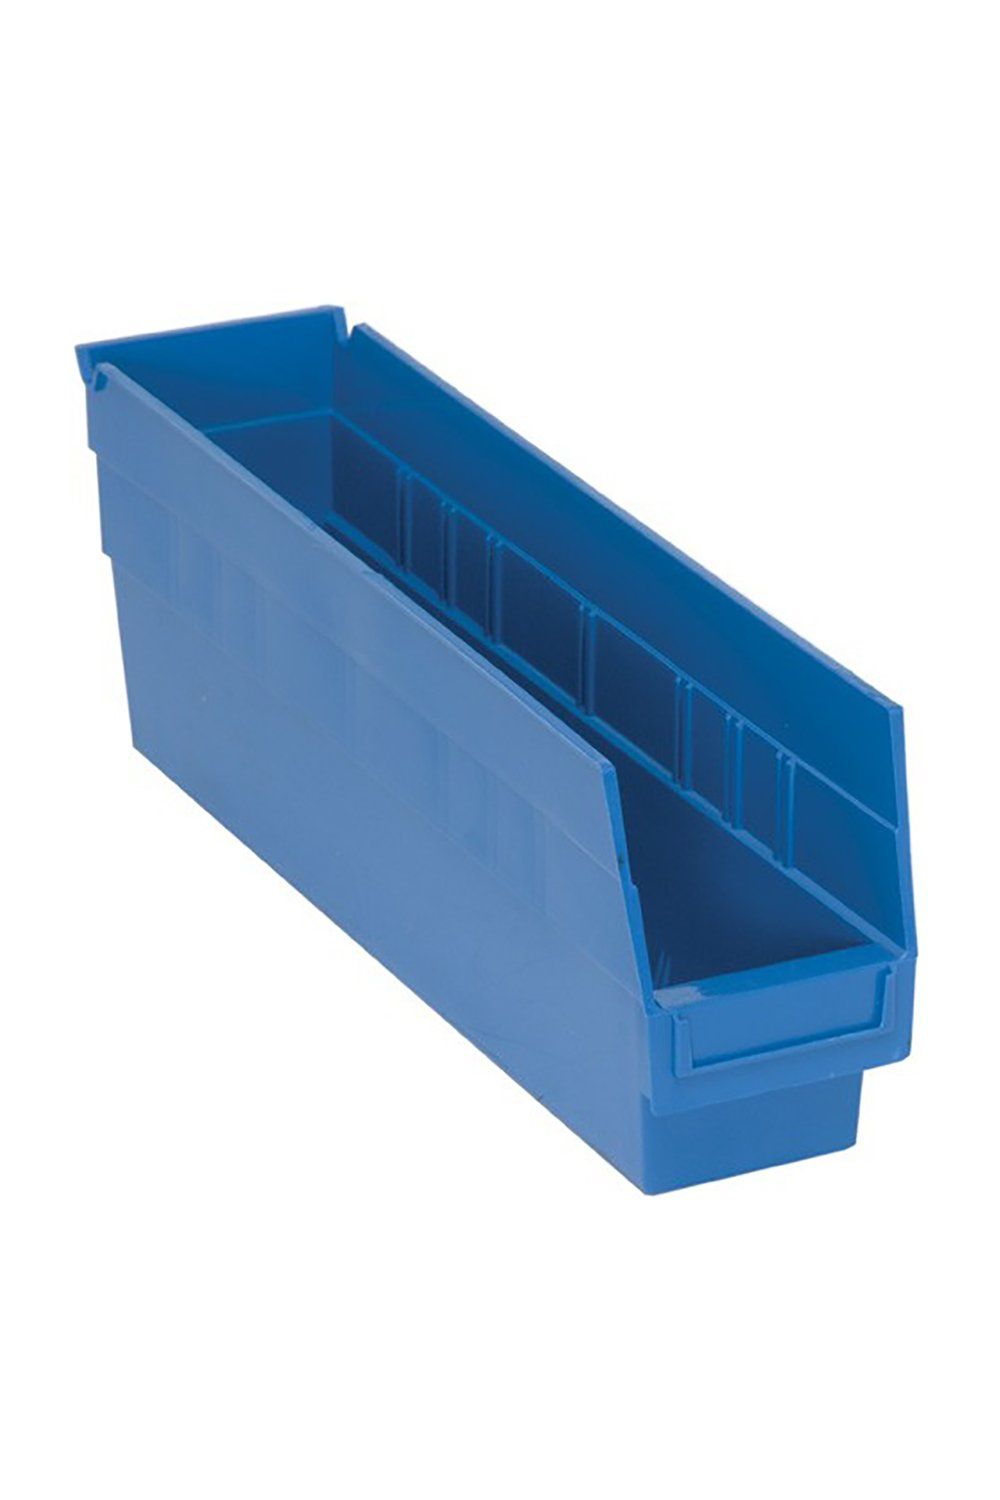 Shelf Bin for 18"D Shelves Bins & Containers Acart 17-7/8'' x 4-1/8'' x 6'' Blue 